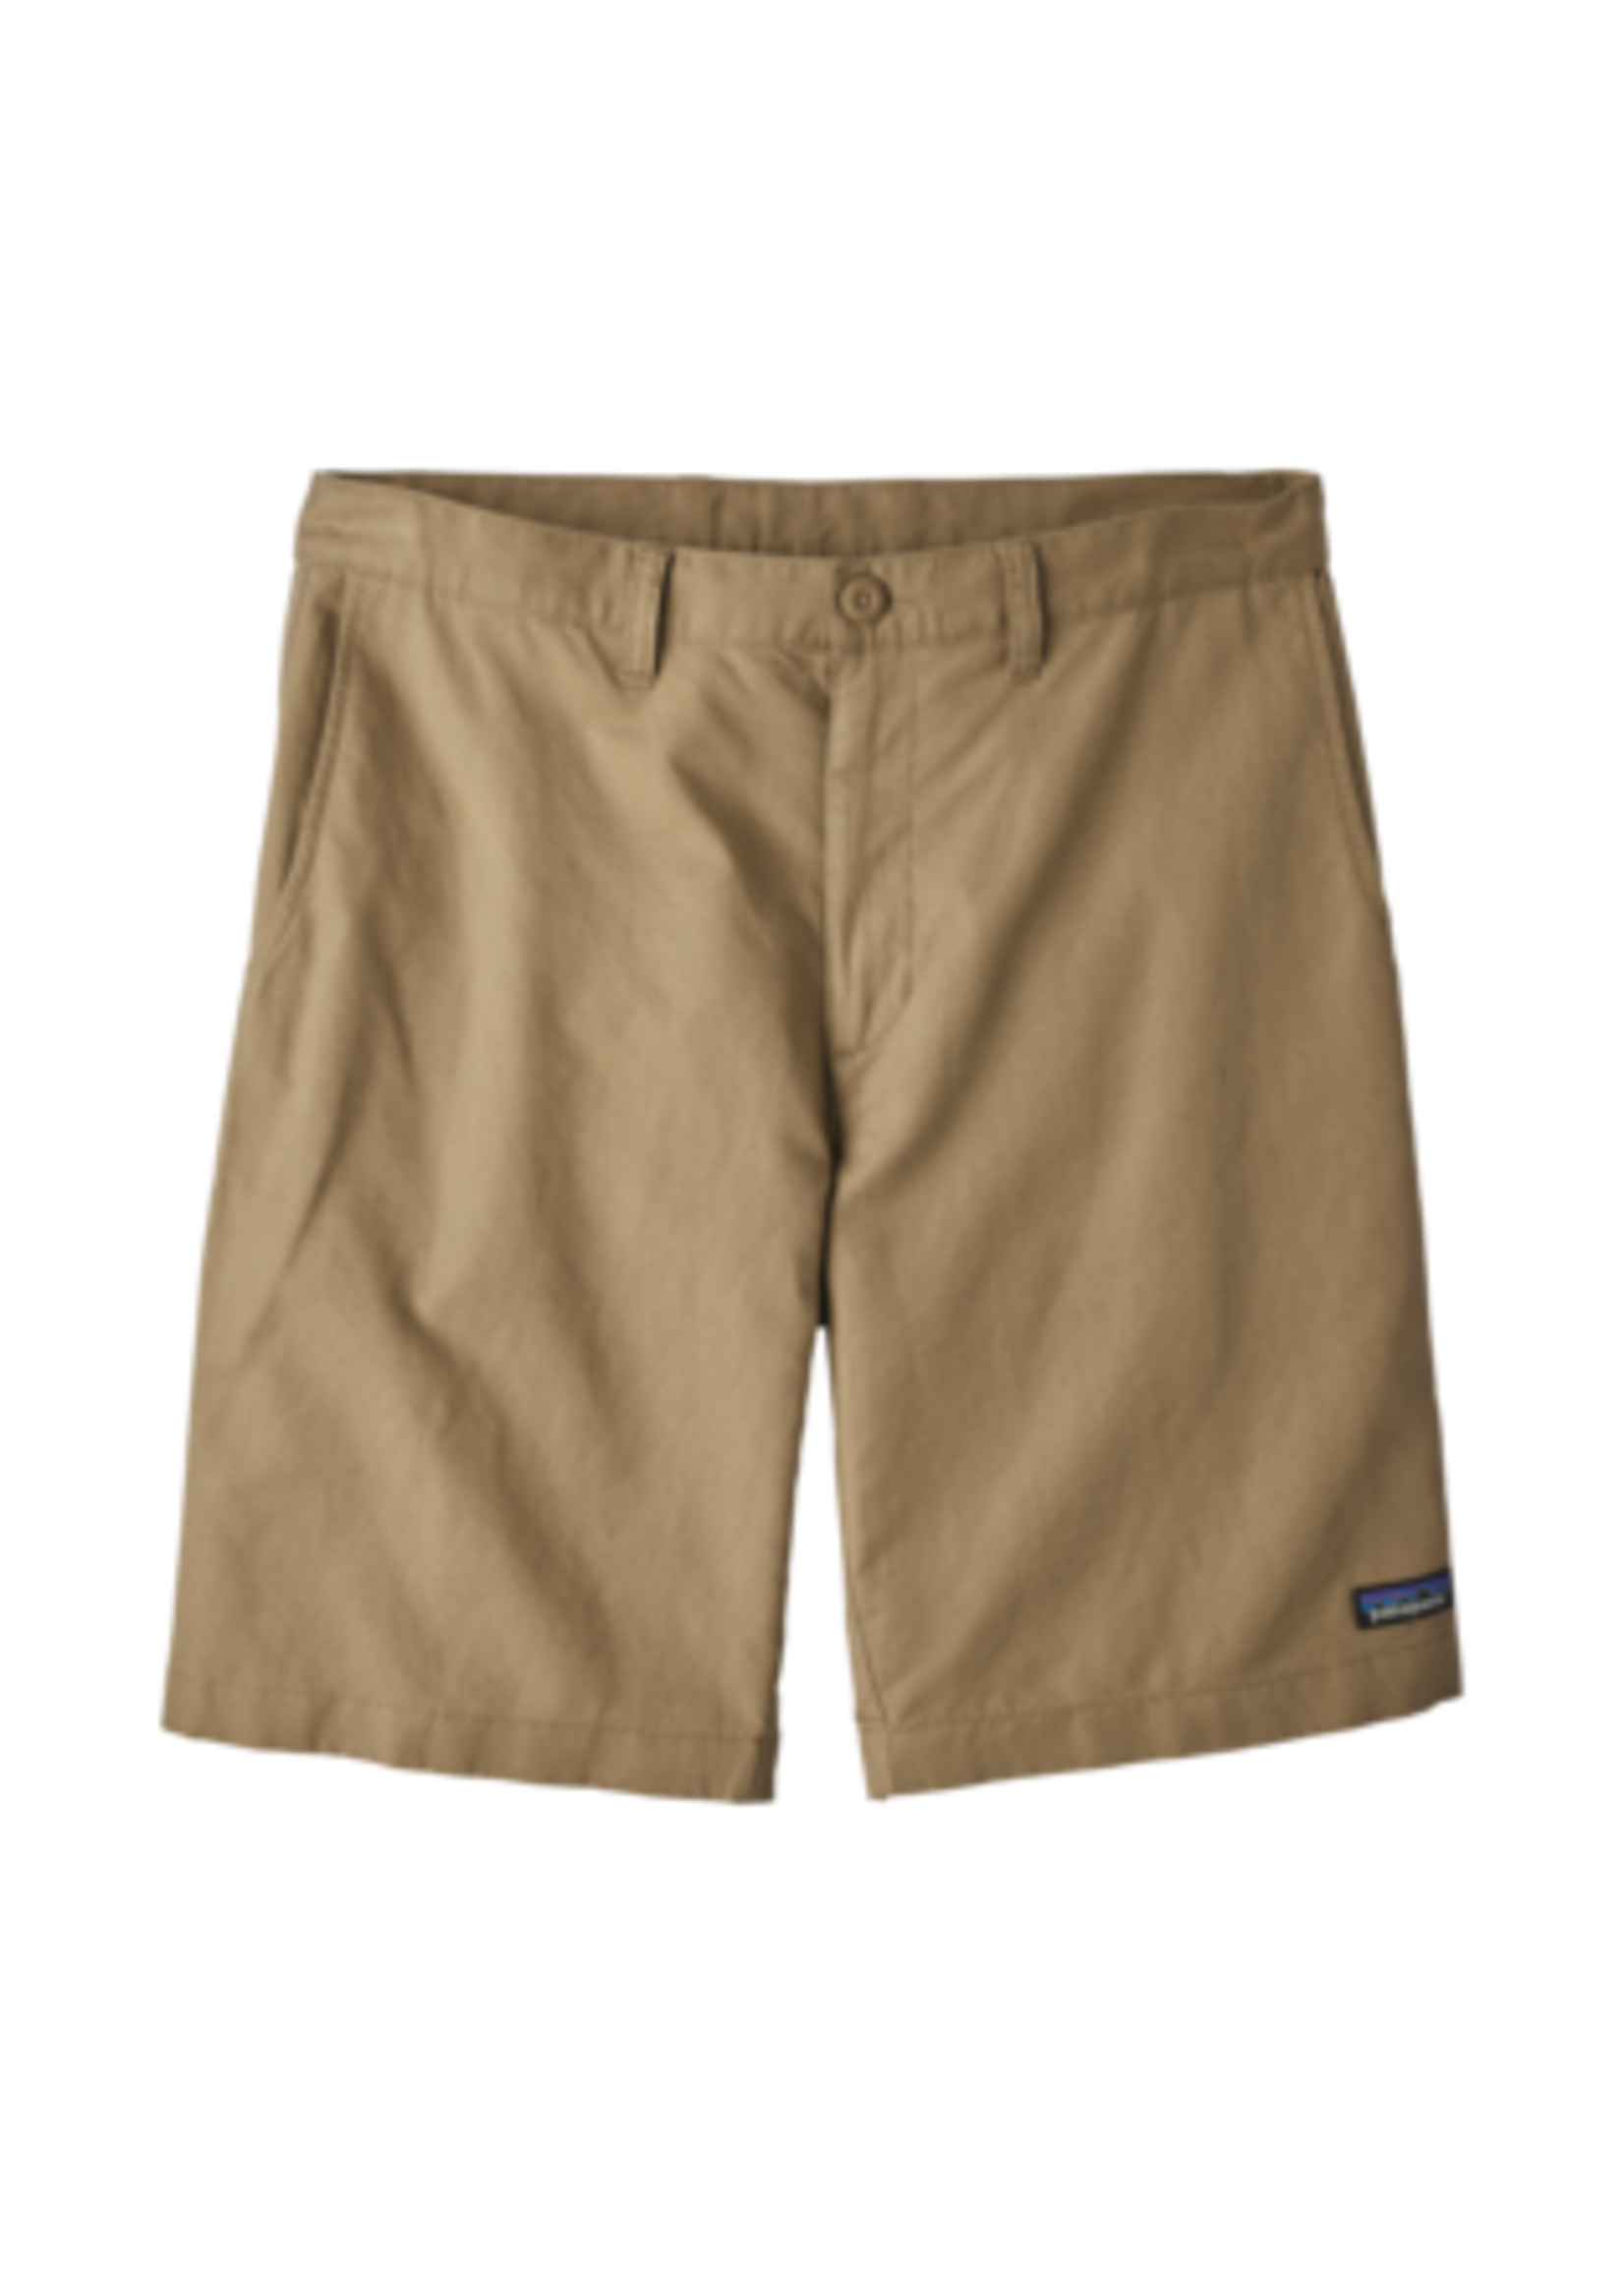 Patagonia M's LW All-Wear Hemp Shorts - 10 in. - Mojave Khaki